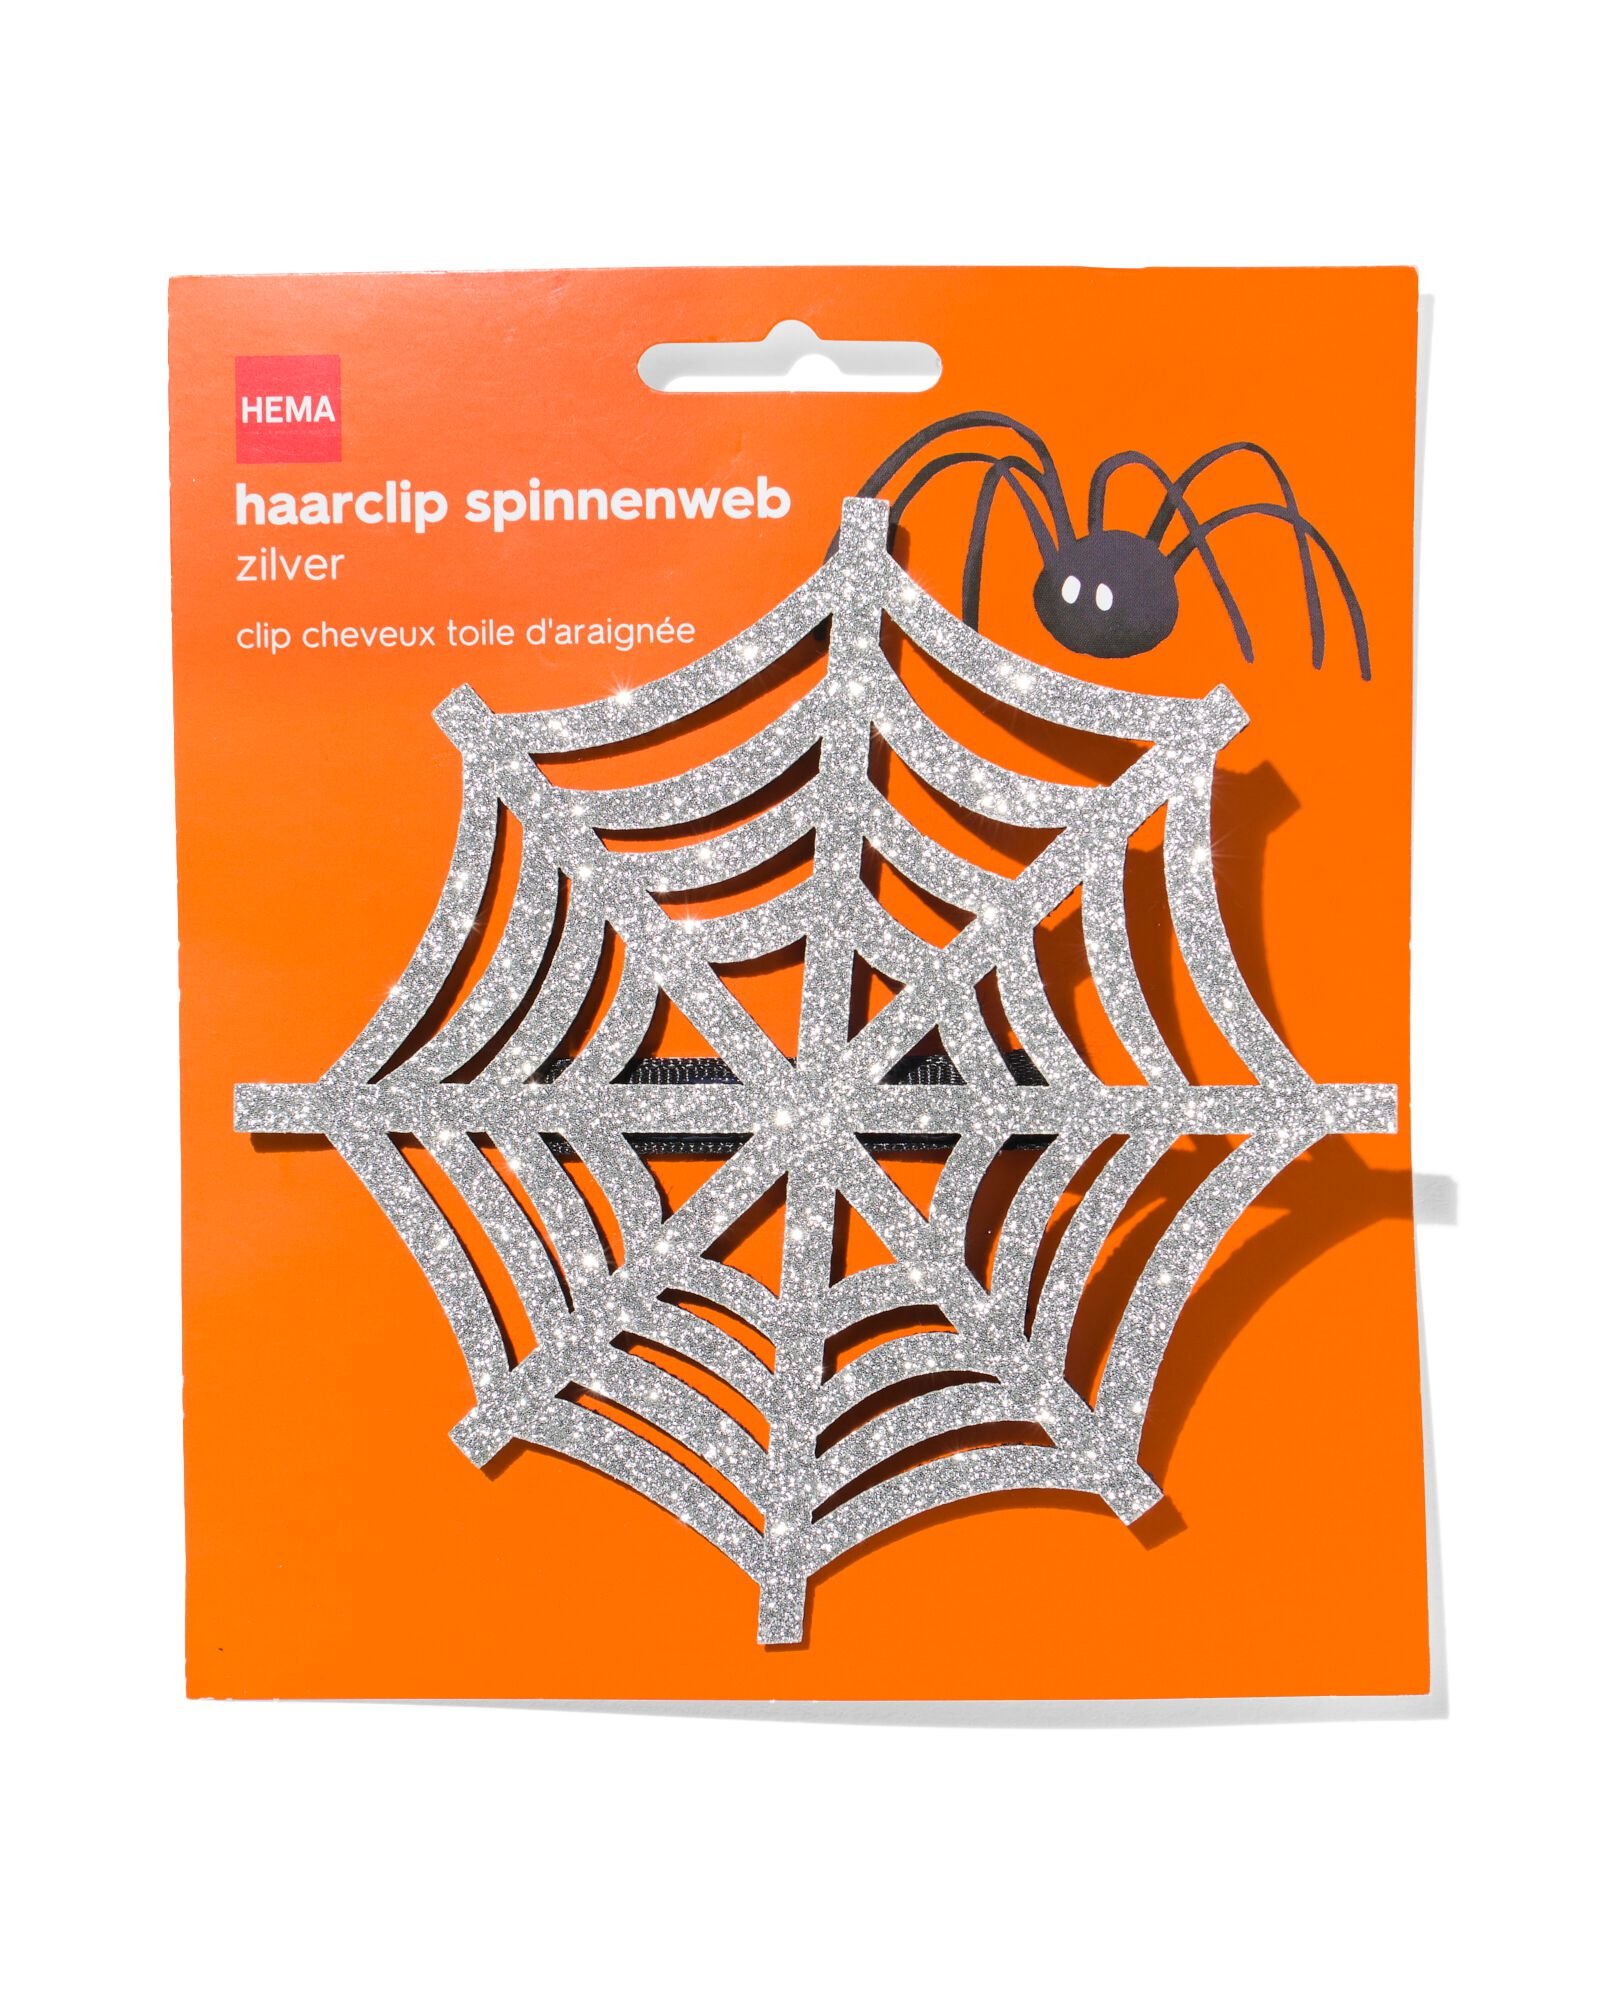 haarclip glitter spinnenweb - HEMA